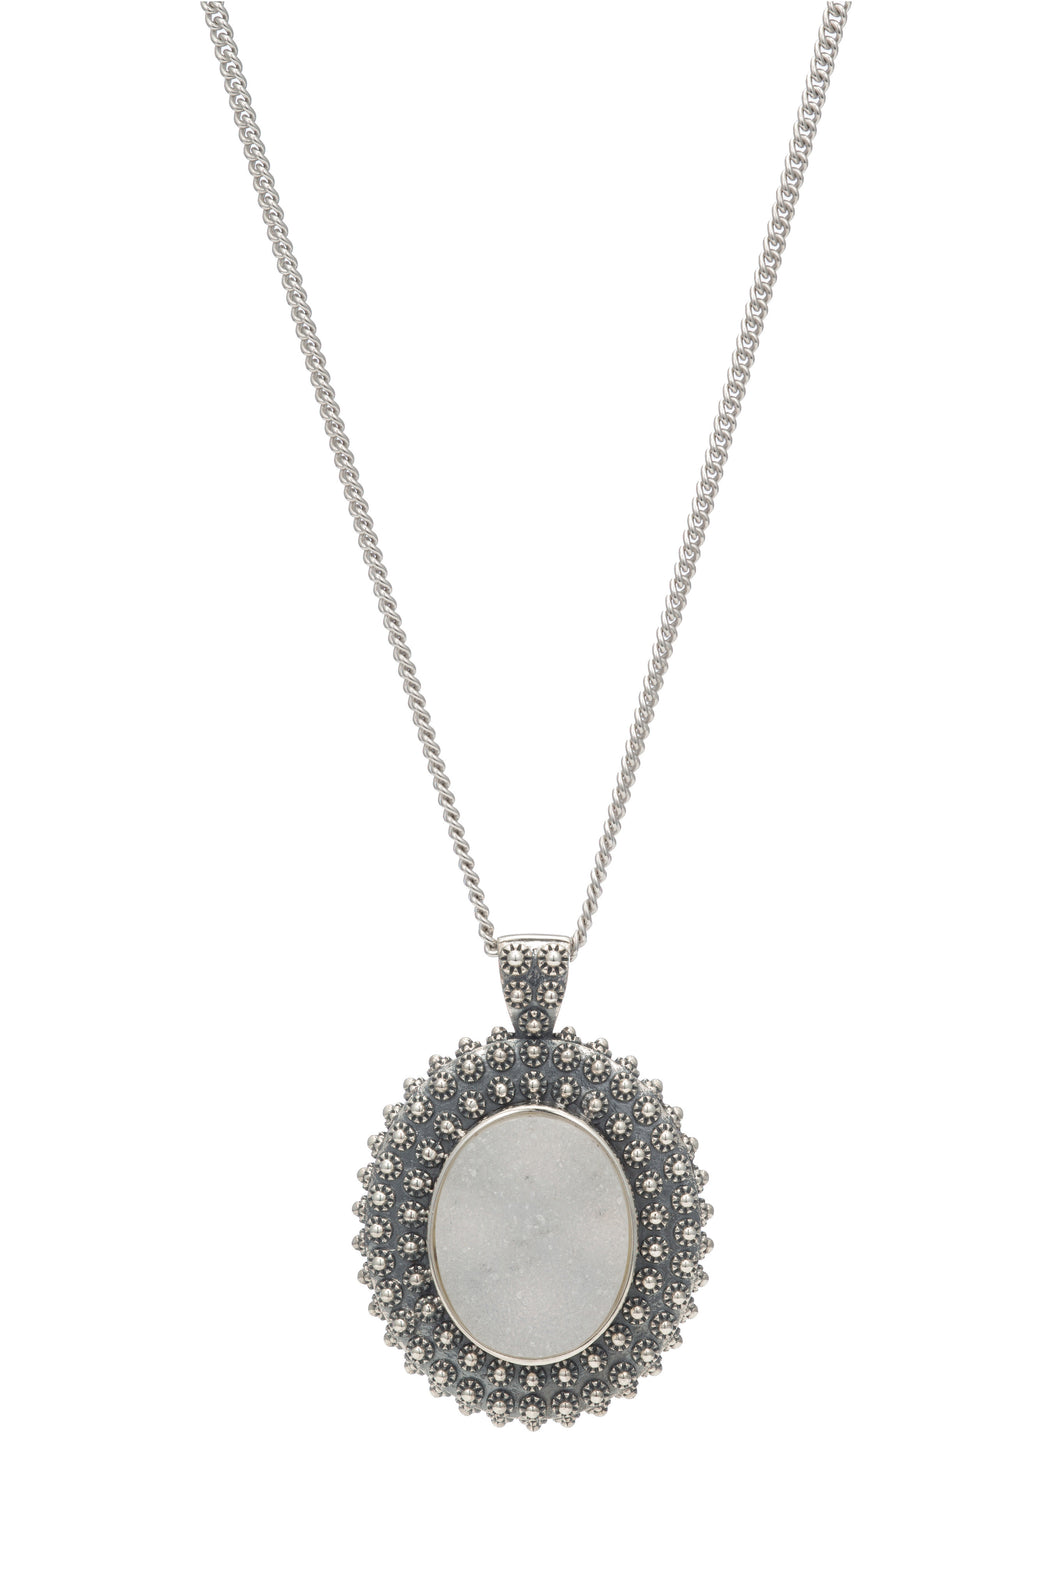 Stupa Drusy Pendant - pendant - KIR Collection - designer sterling silver jewelry 